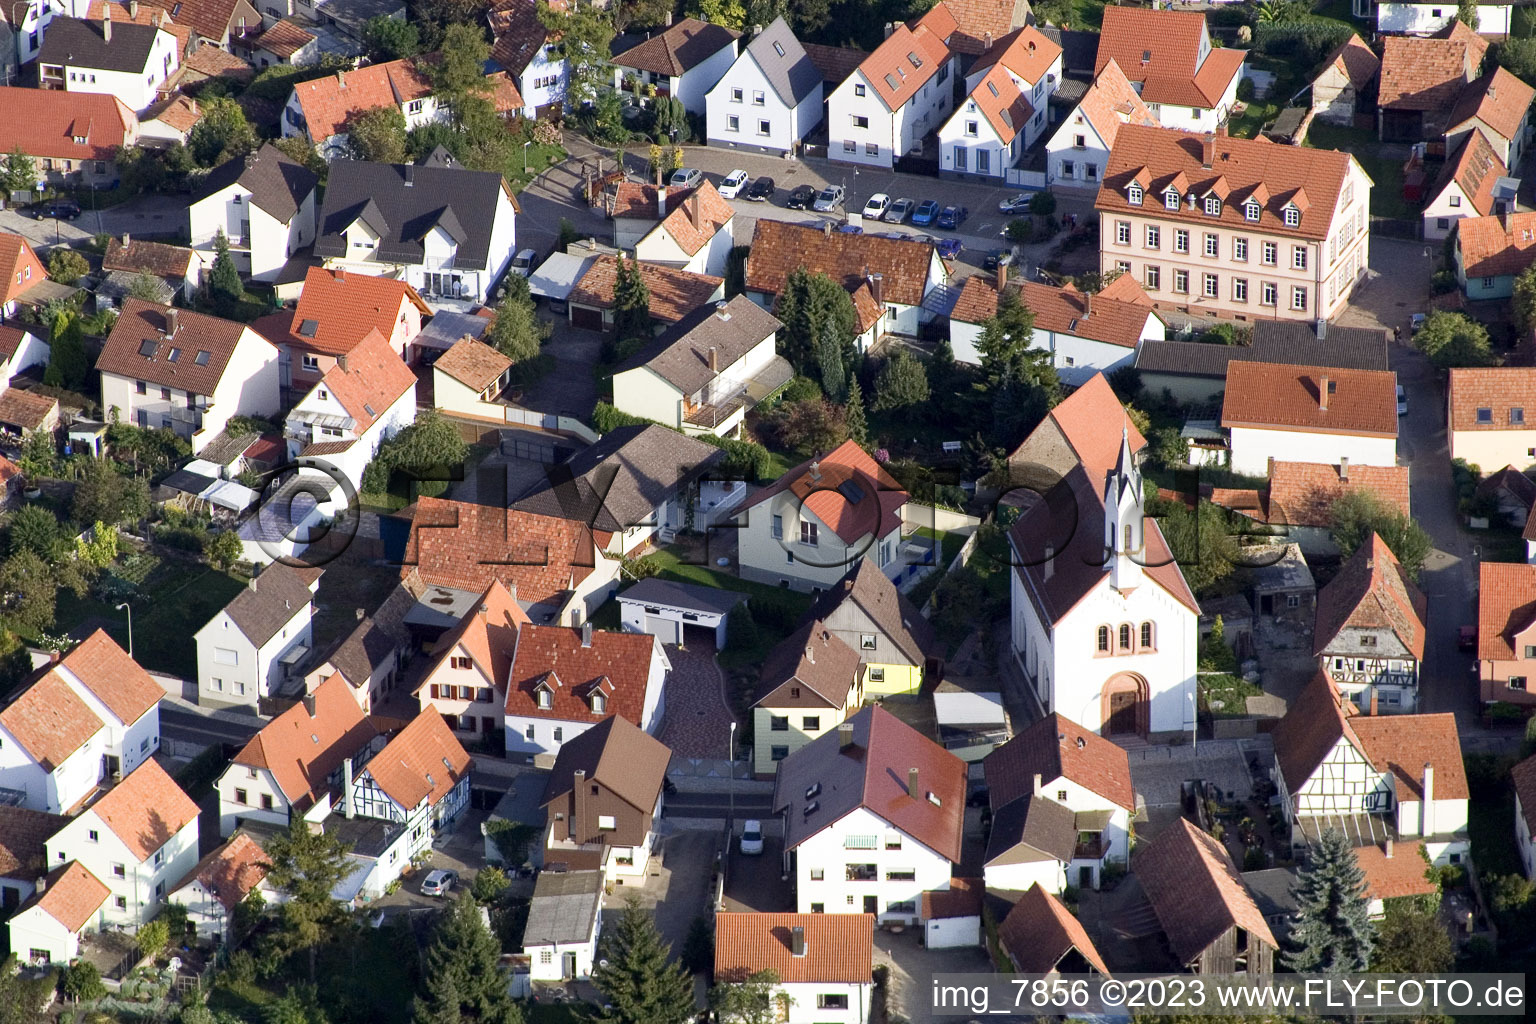 District Maximiliansau in Wörth am Rhein in the state Rhineland-Palatinate, Germany from a drone